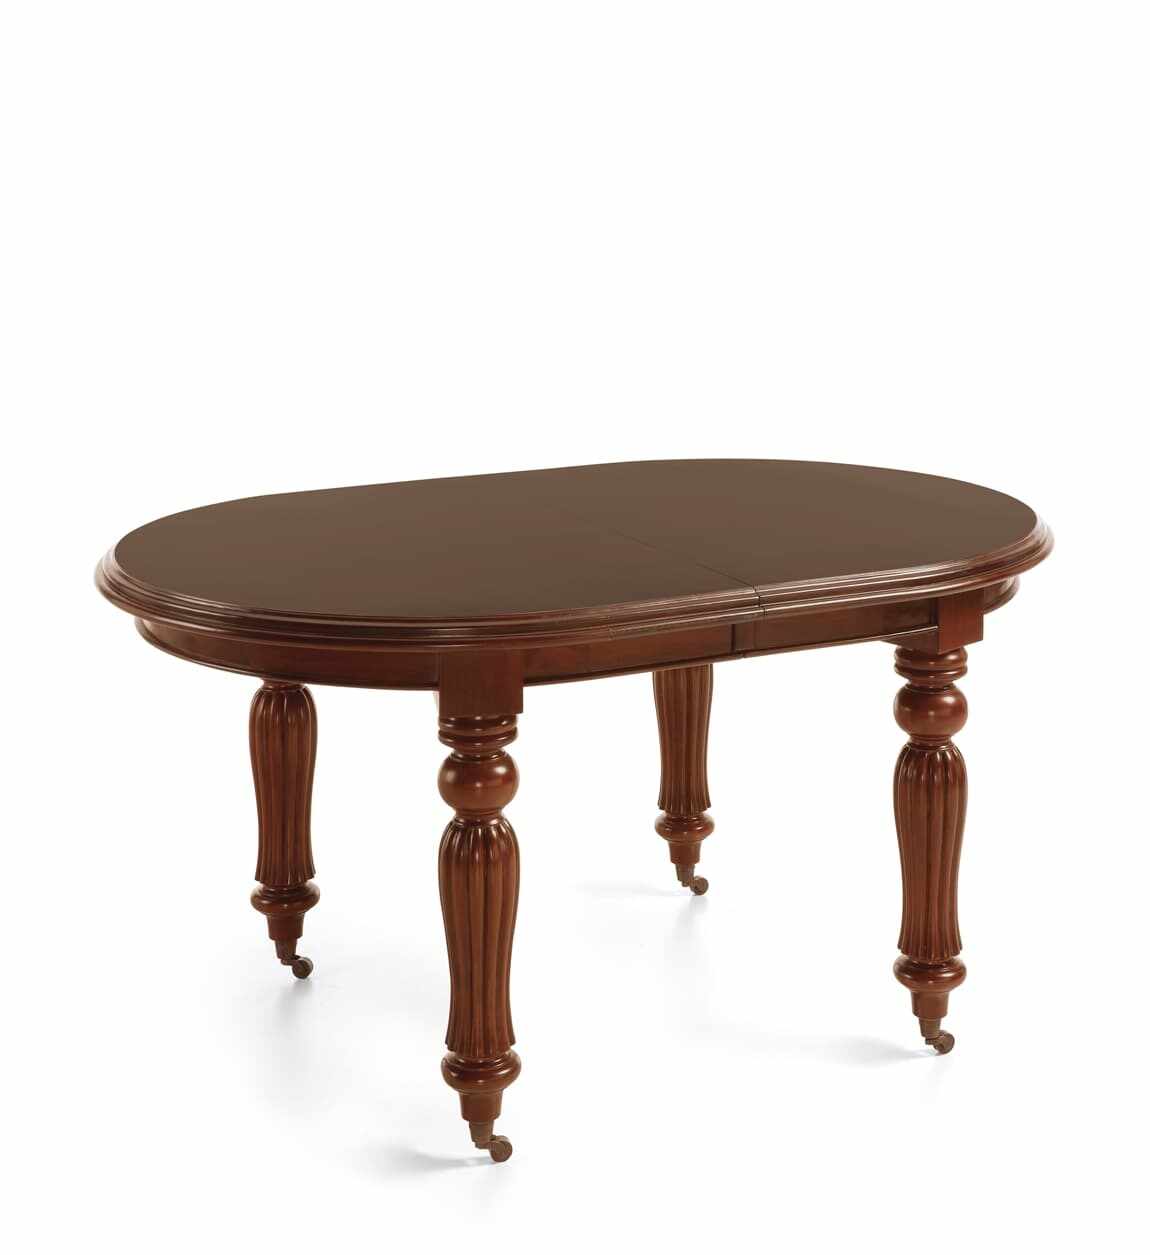 Masa din lemn extensibila cu rotile, Vintage Oval Nuc, L160-240xl110xH80 cm